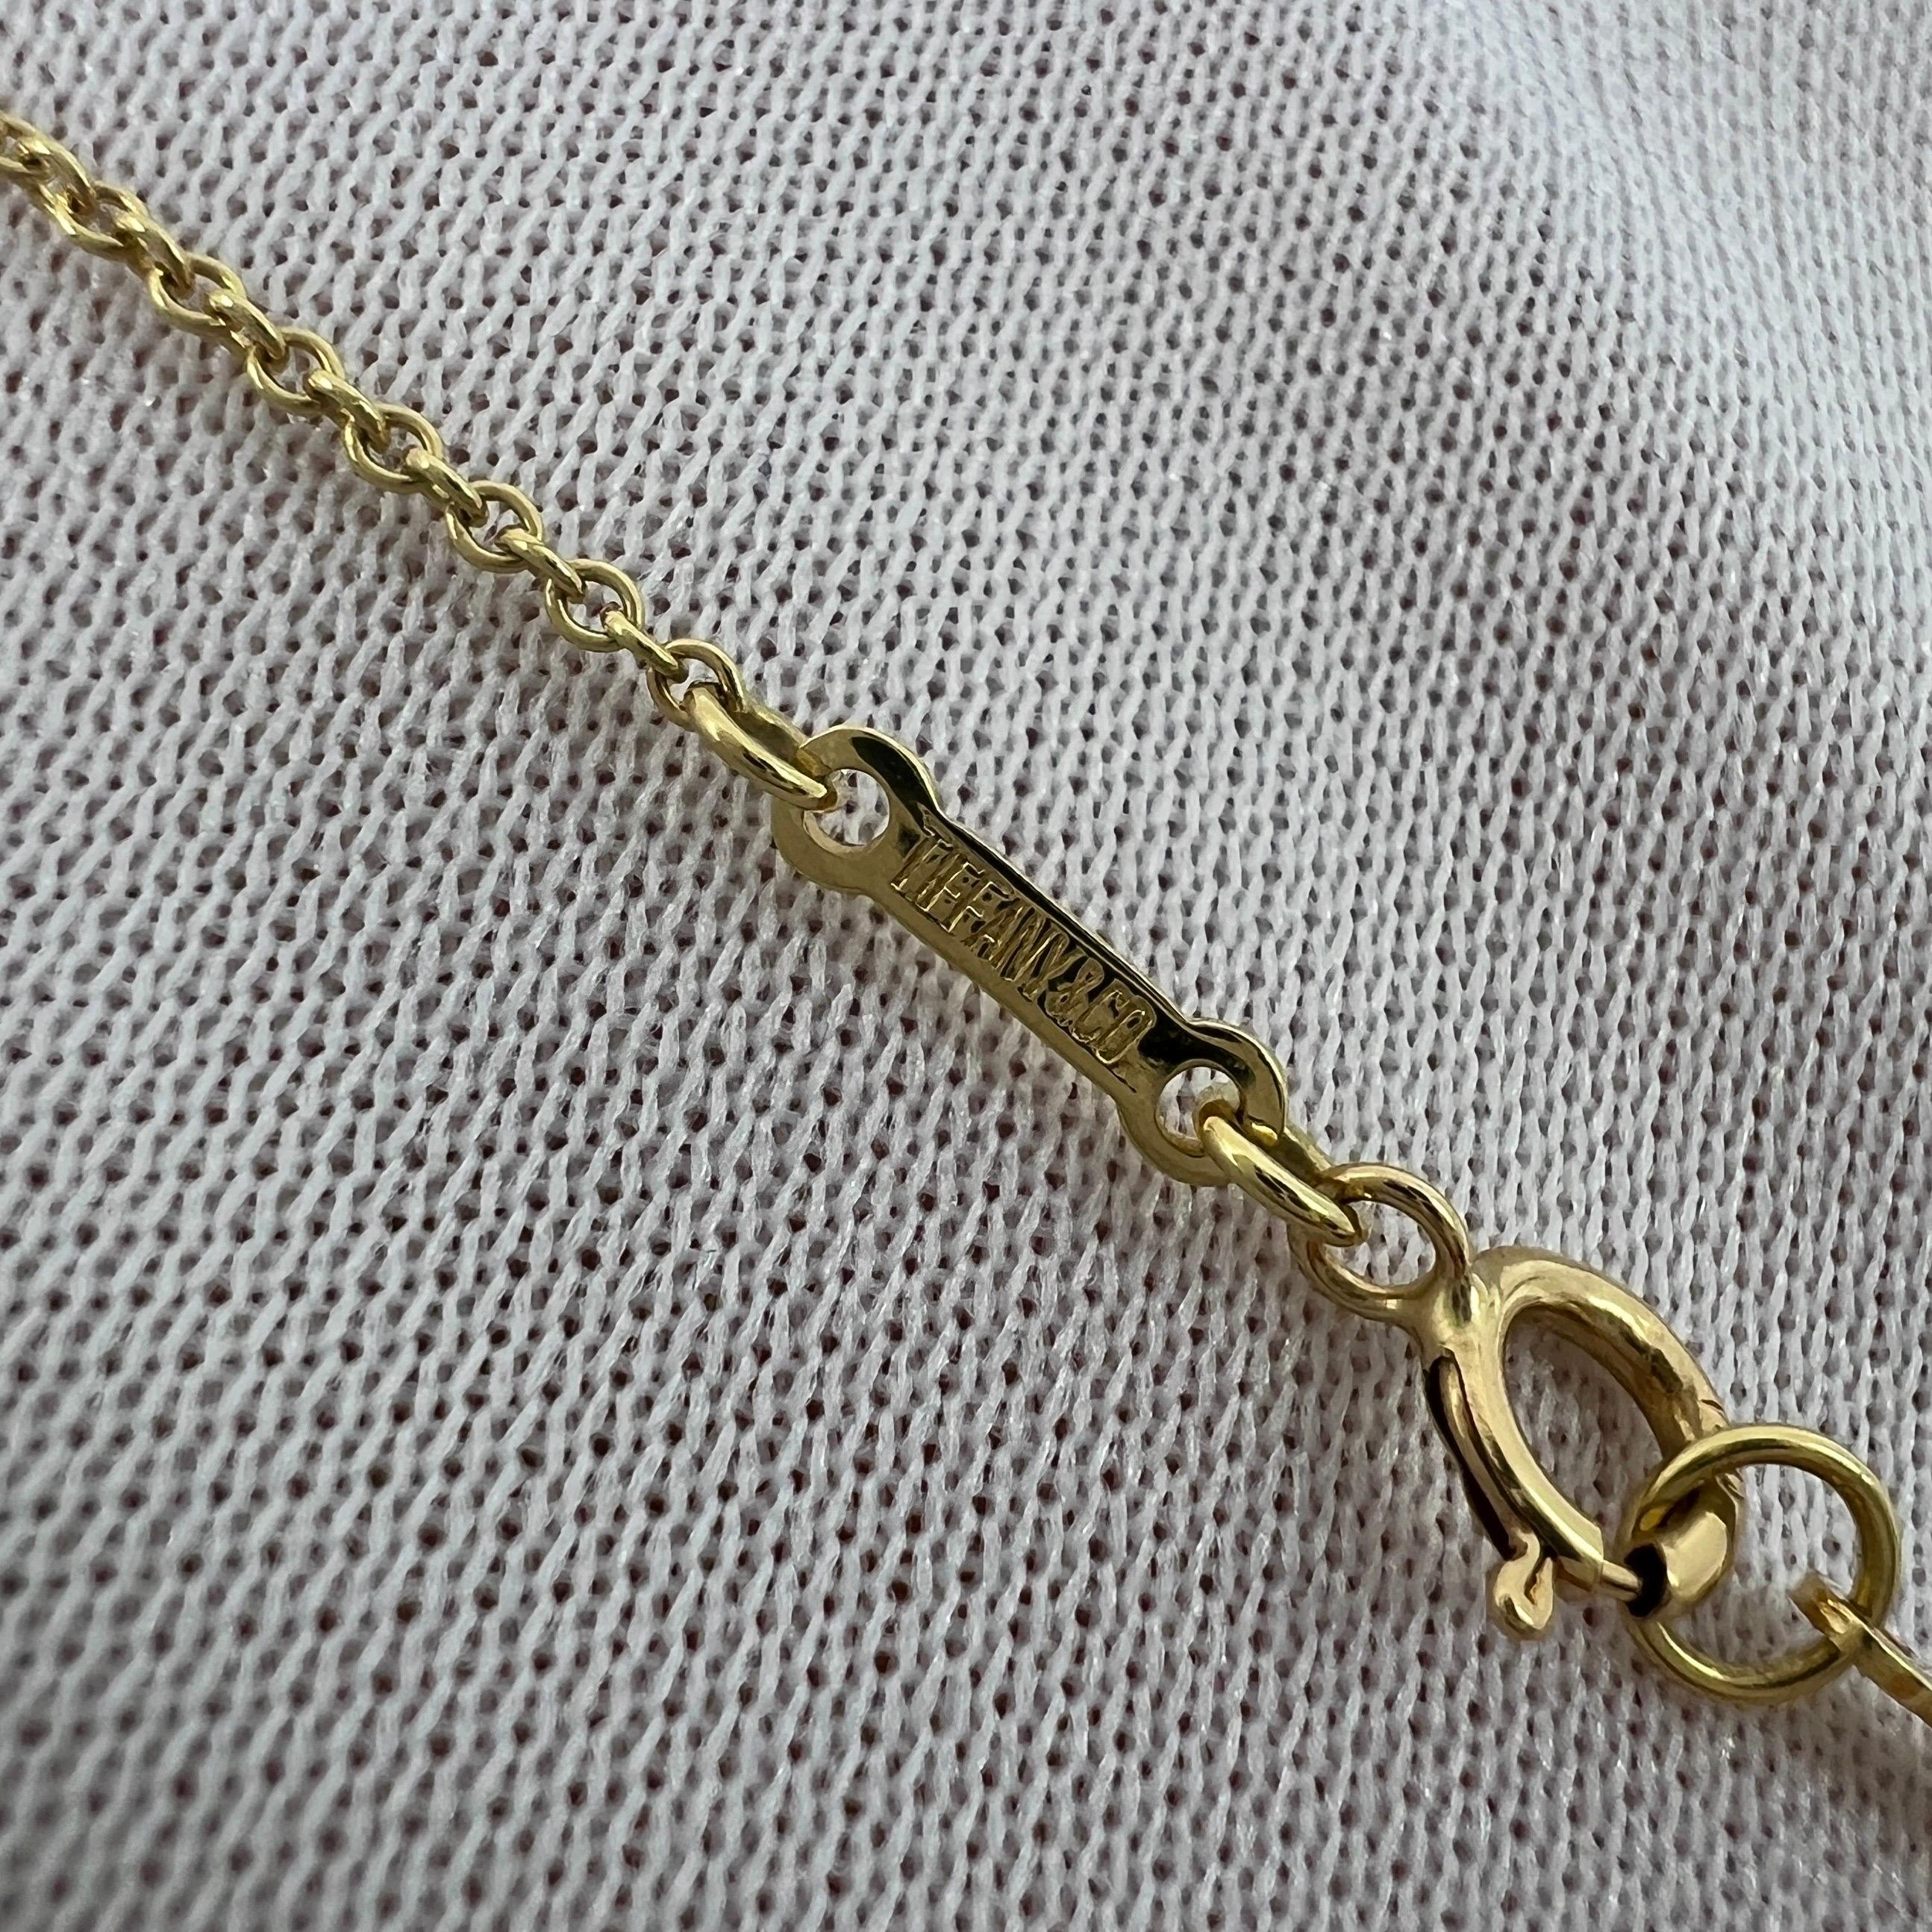 Vintage Tiffany & Co. Elsa Peretti Open Heart 18k Gold Pendant Necklace 15mm 6